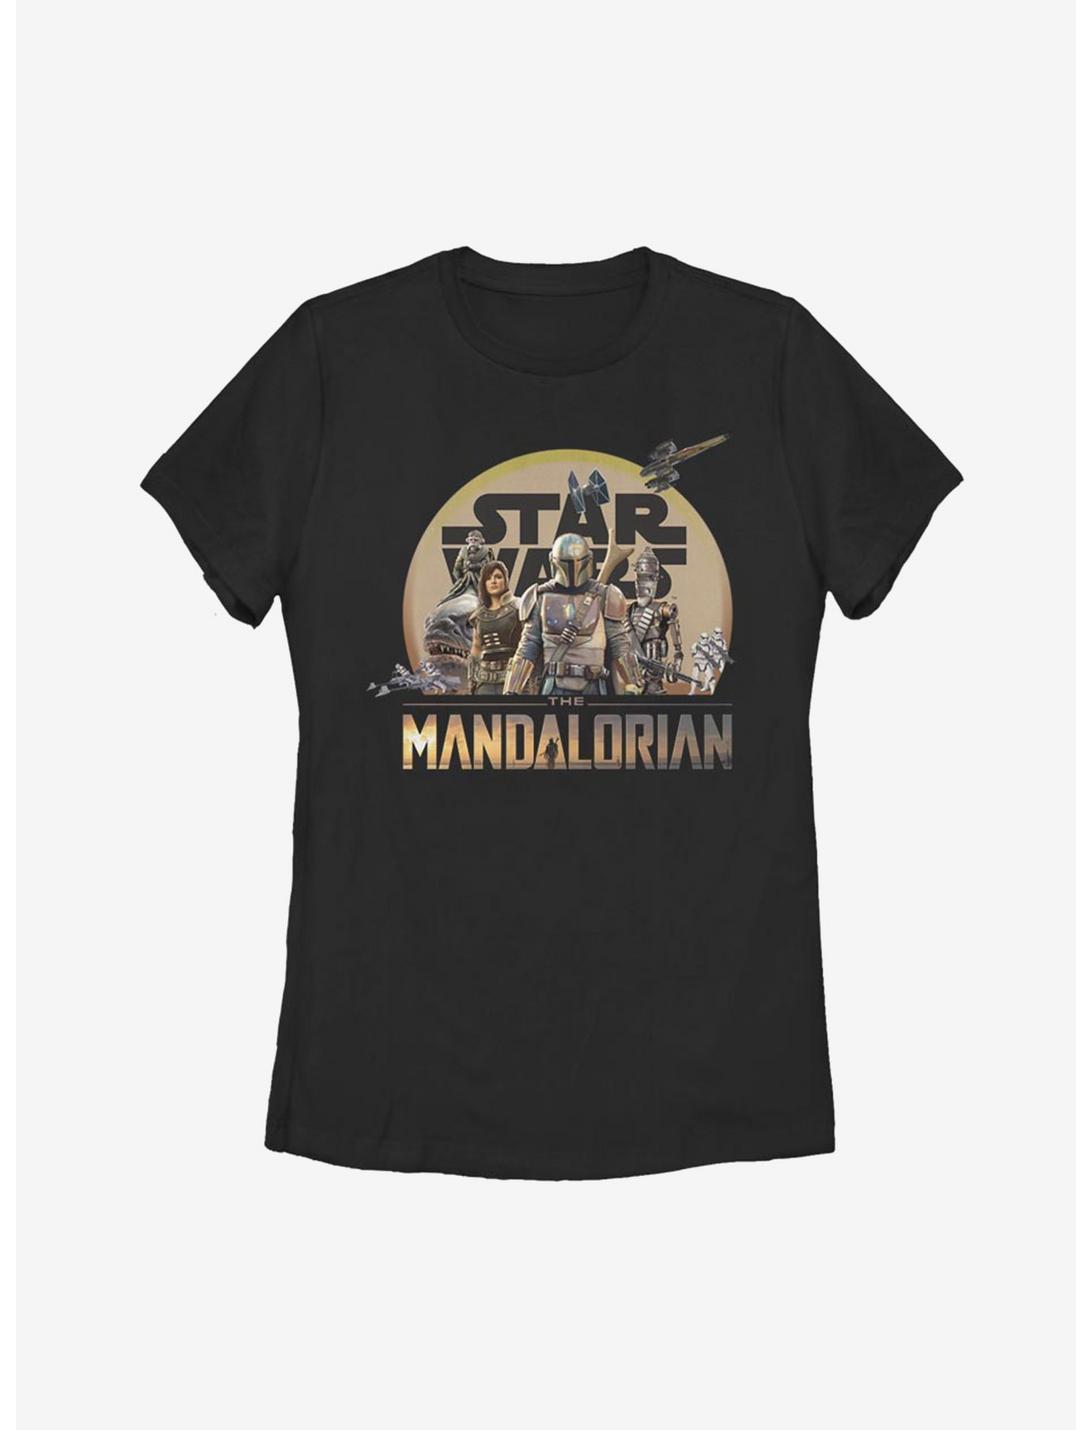 Star Wars The Mandalorian Charcter Action Pose Womens T-Shirt, BLACK, hi-res